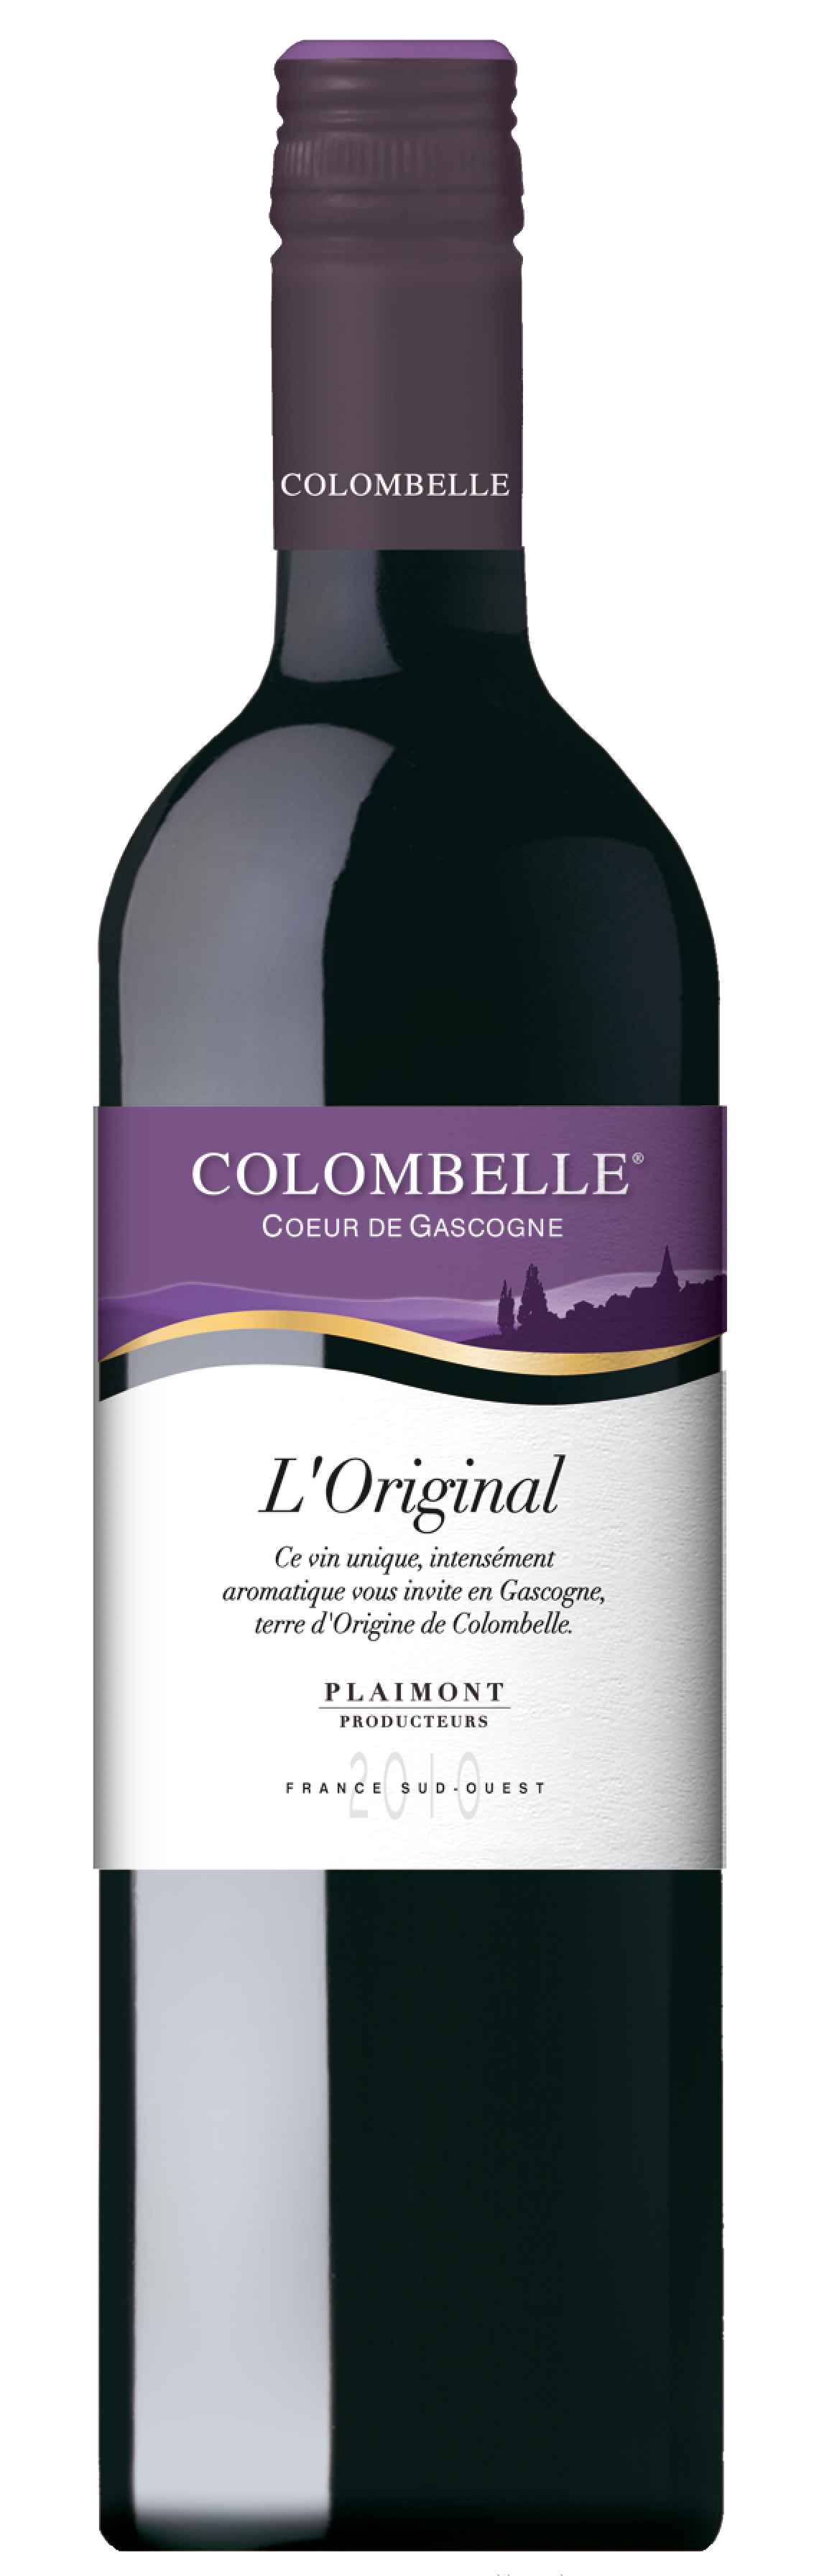 I.G.B. Côtes de Gascogne "COLOMBELLE" ROUGE